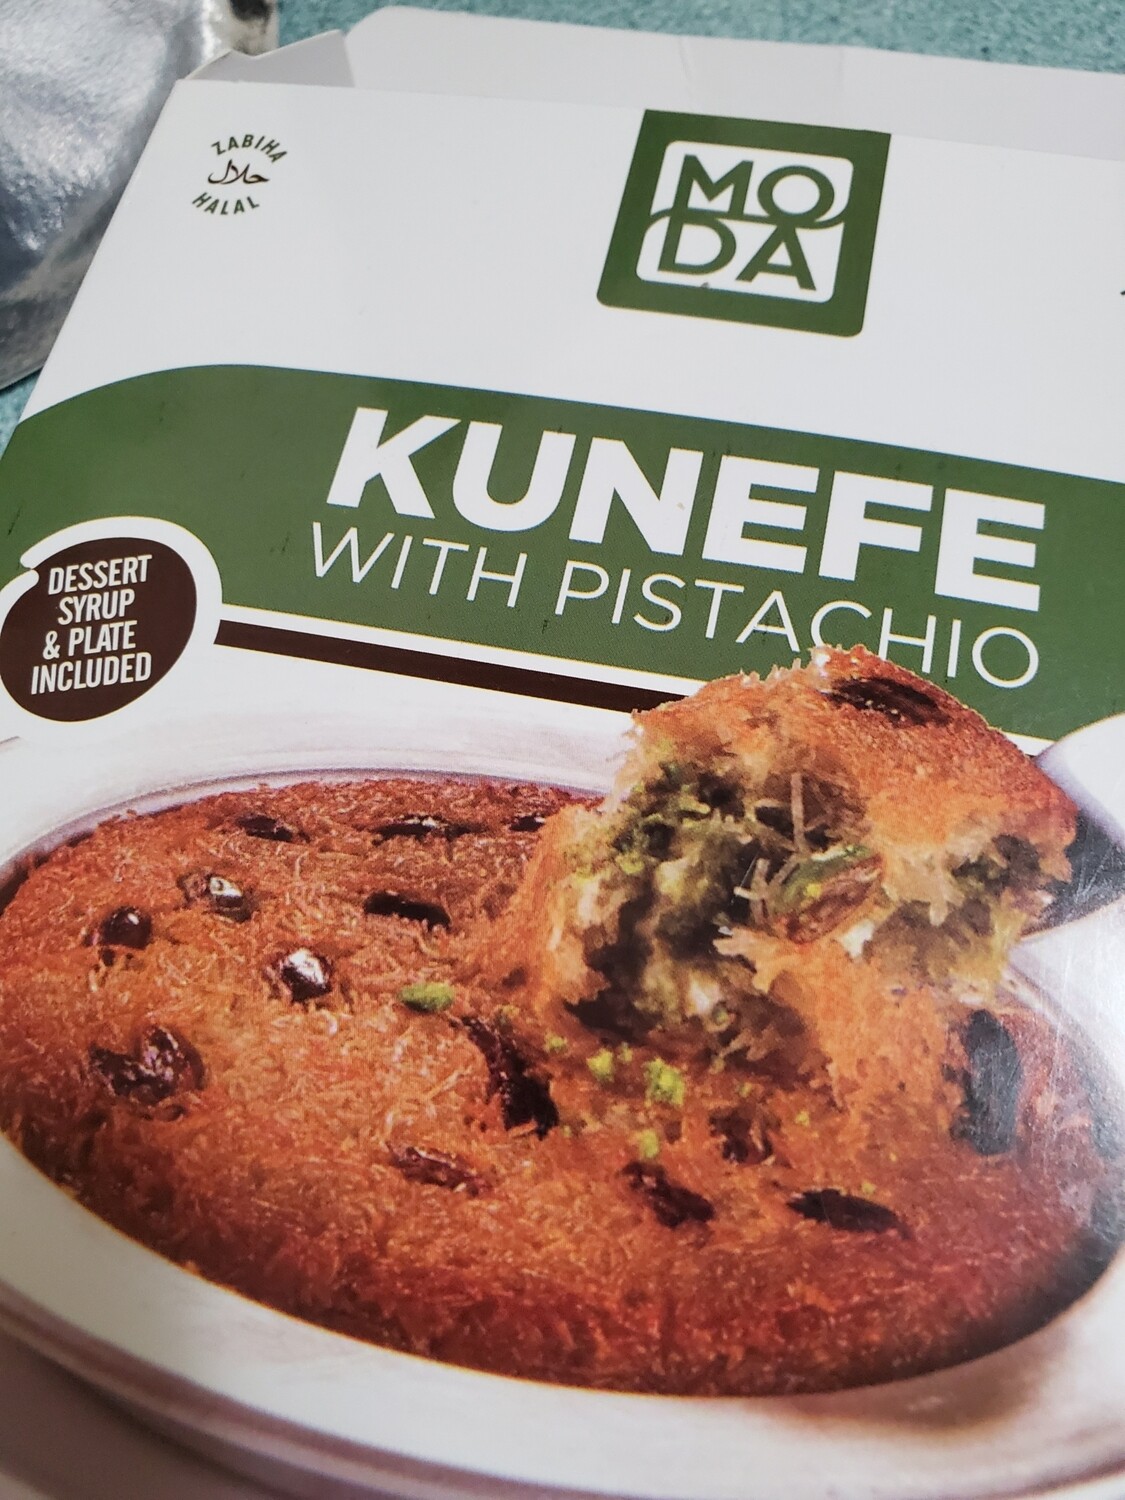 Moda kunafa with pistachios 1 pcs